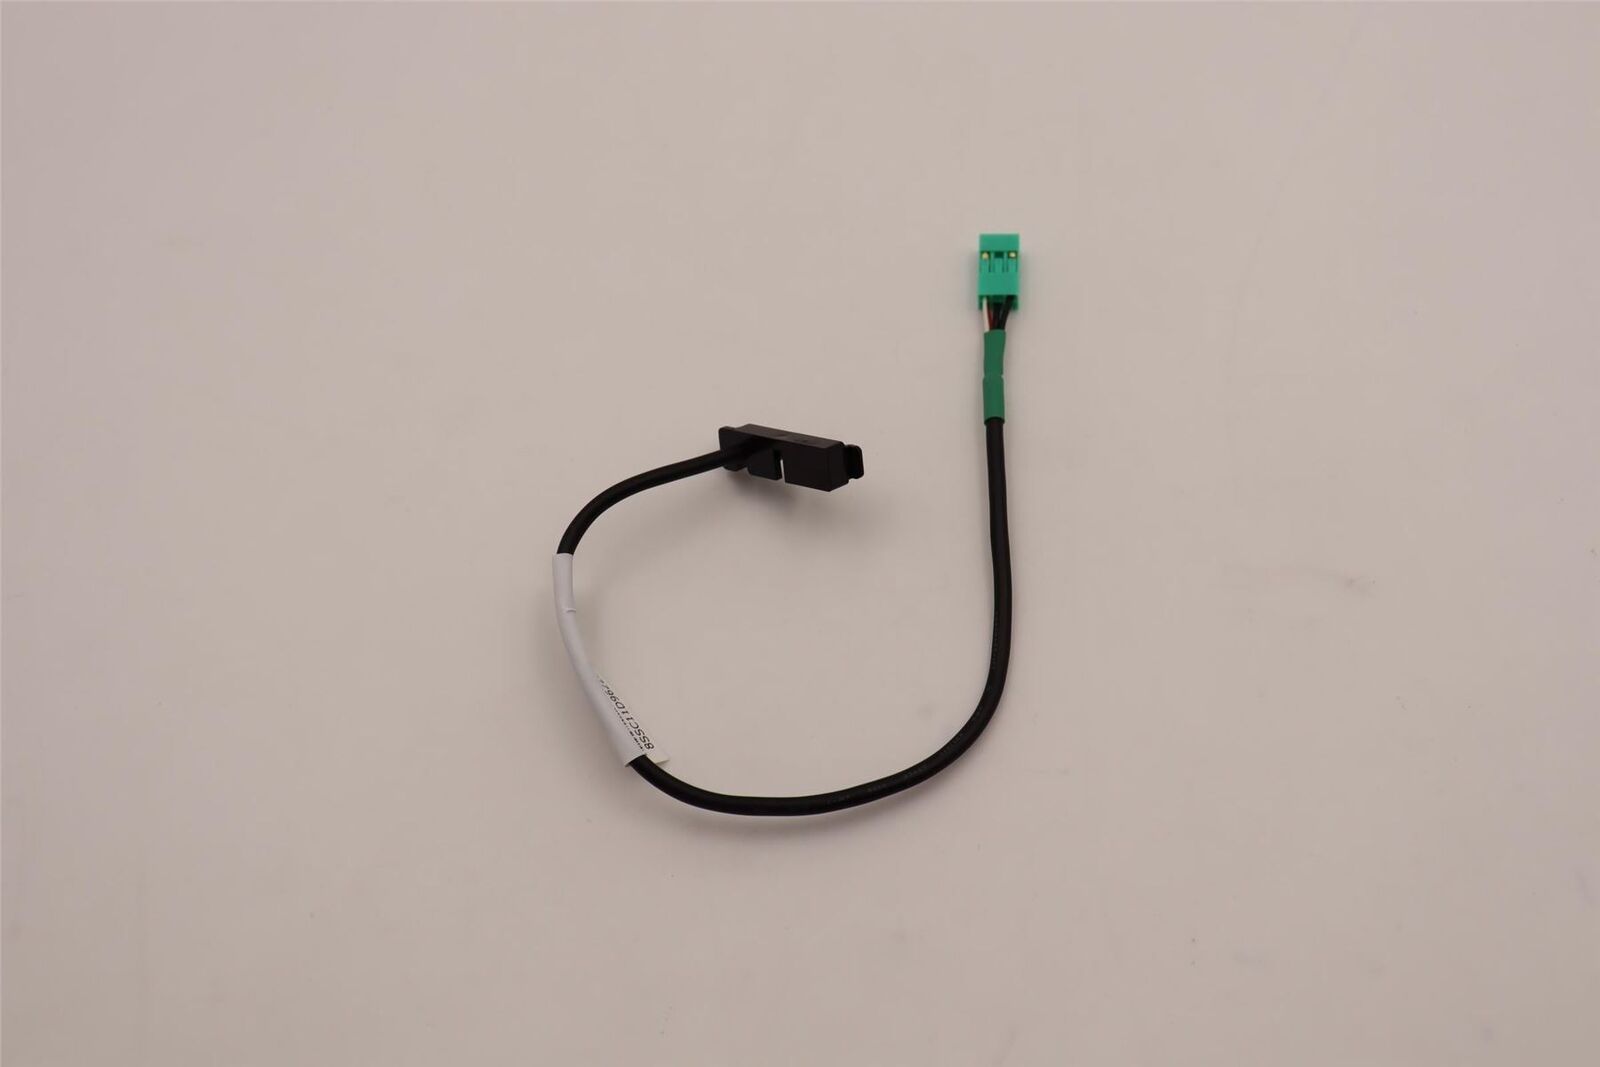 Lenovo IdeaCentre P330 2nd p330 510S-08IKL Sensor Cable 250mm 5C10U58525